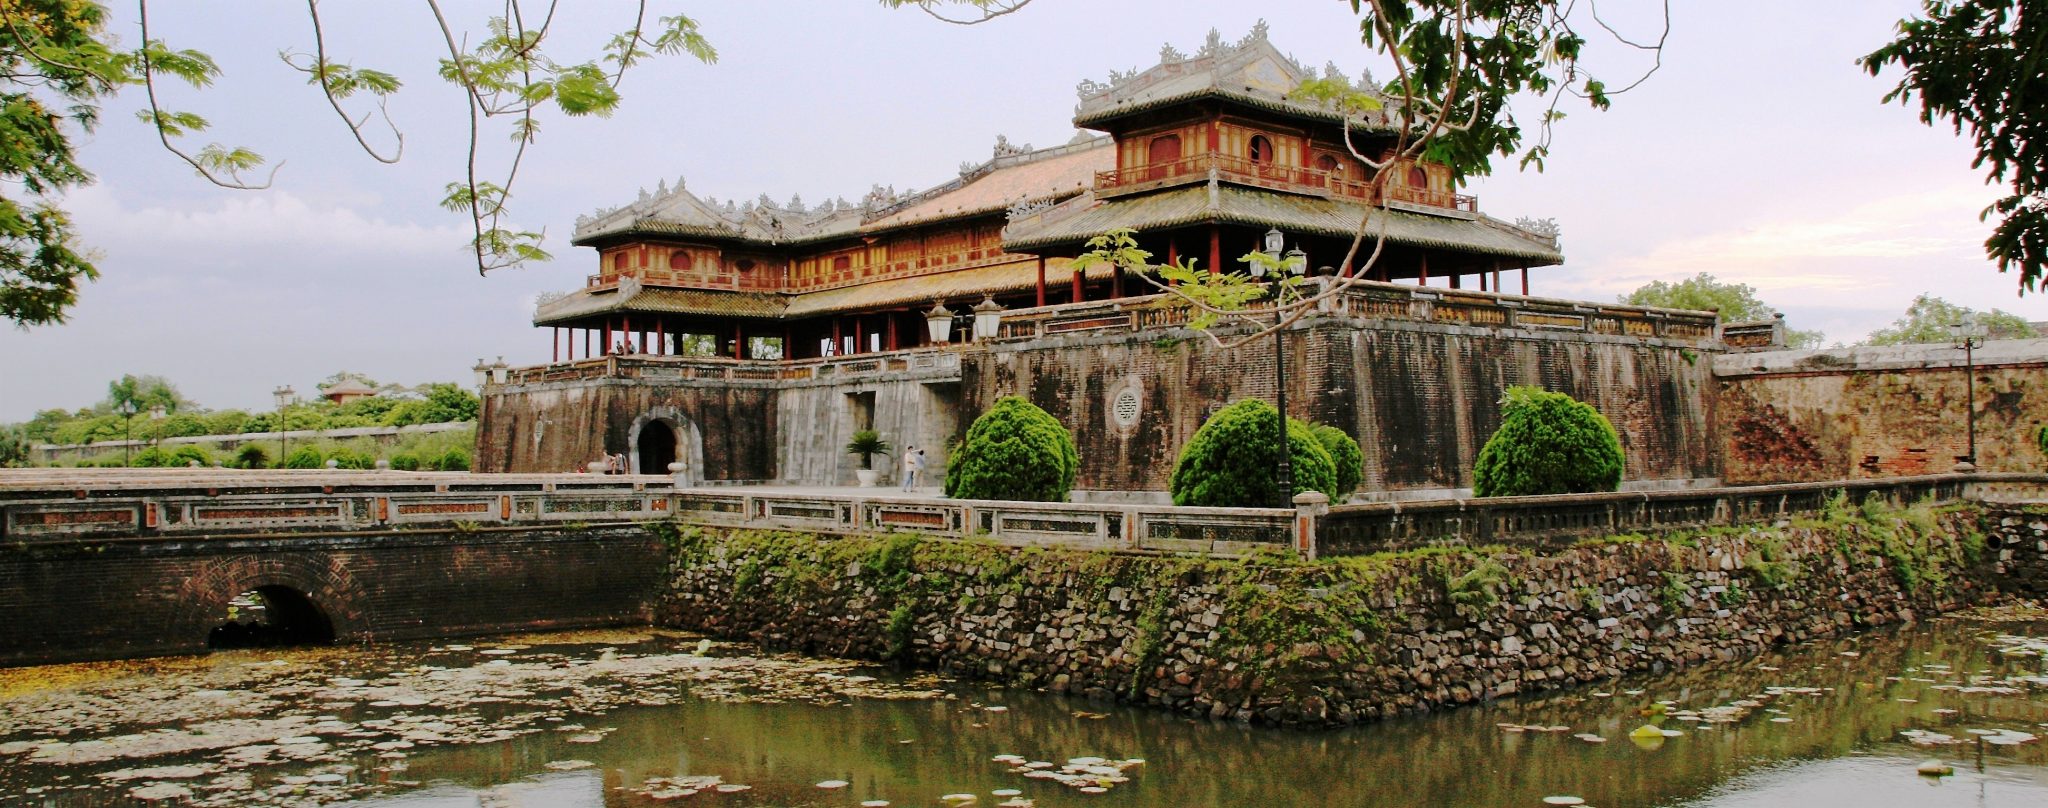 Keizerlijk paleis in Hue, Vietnam